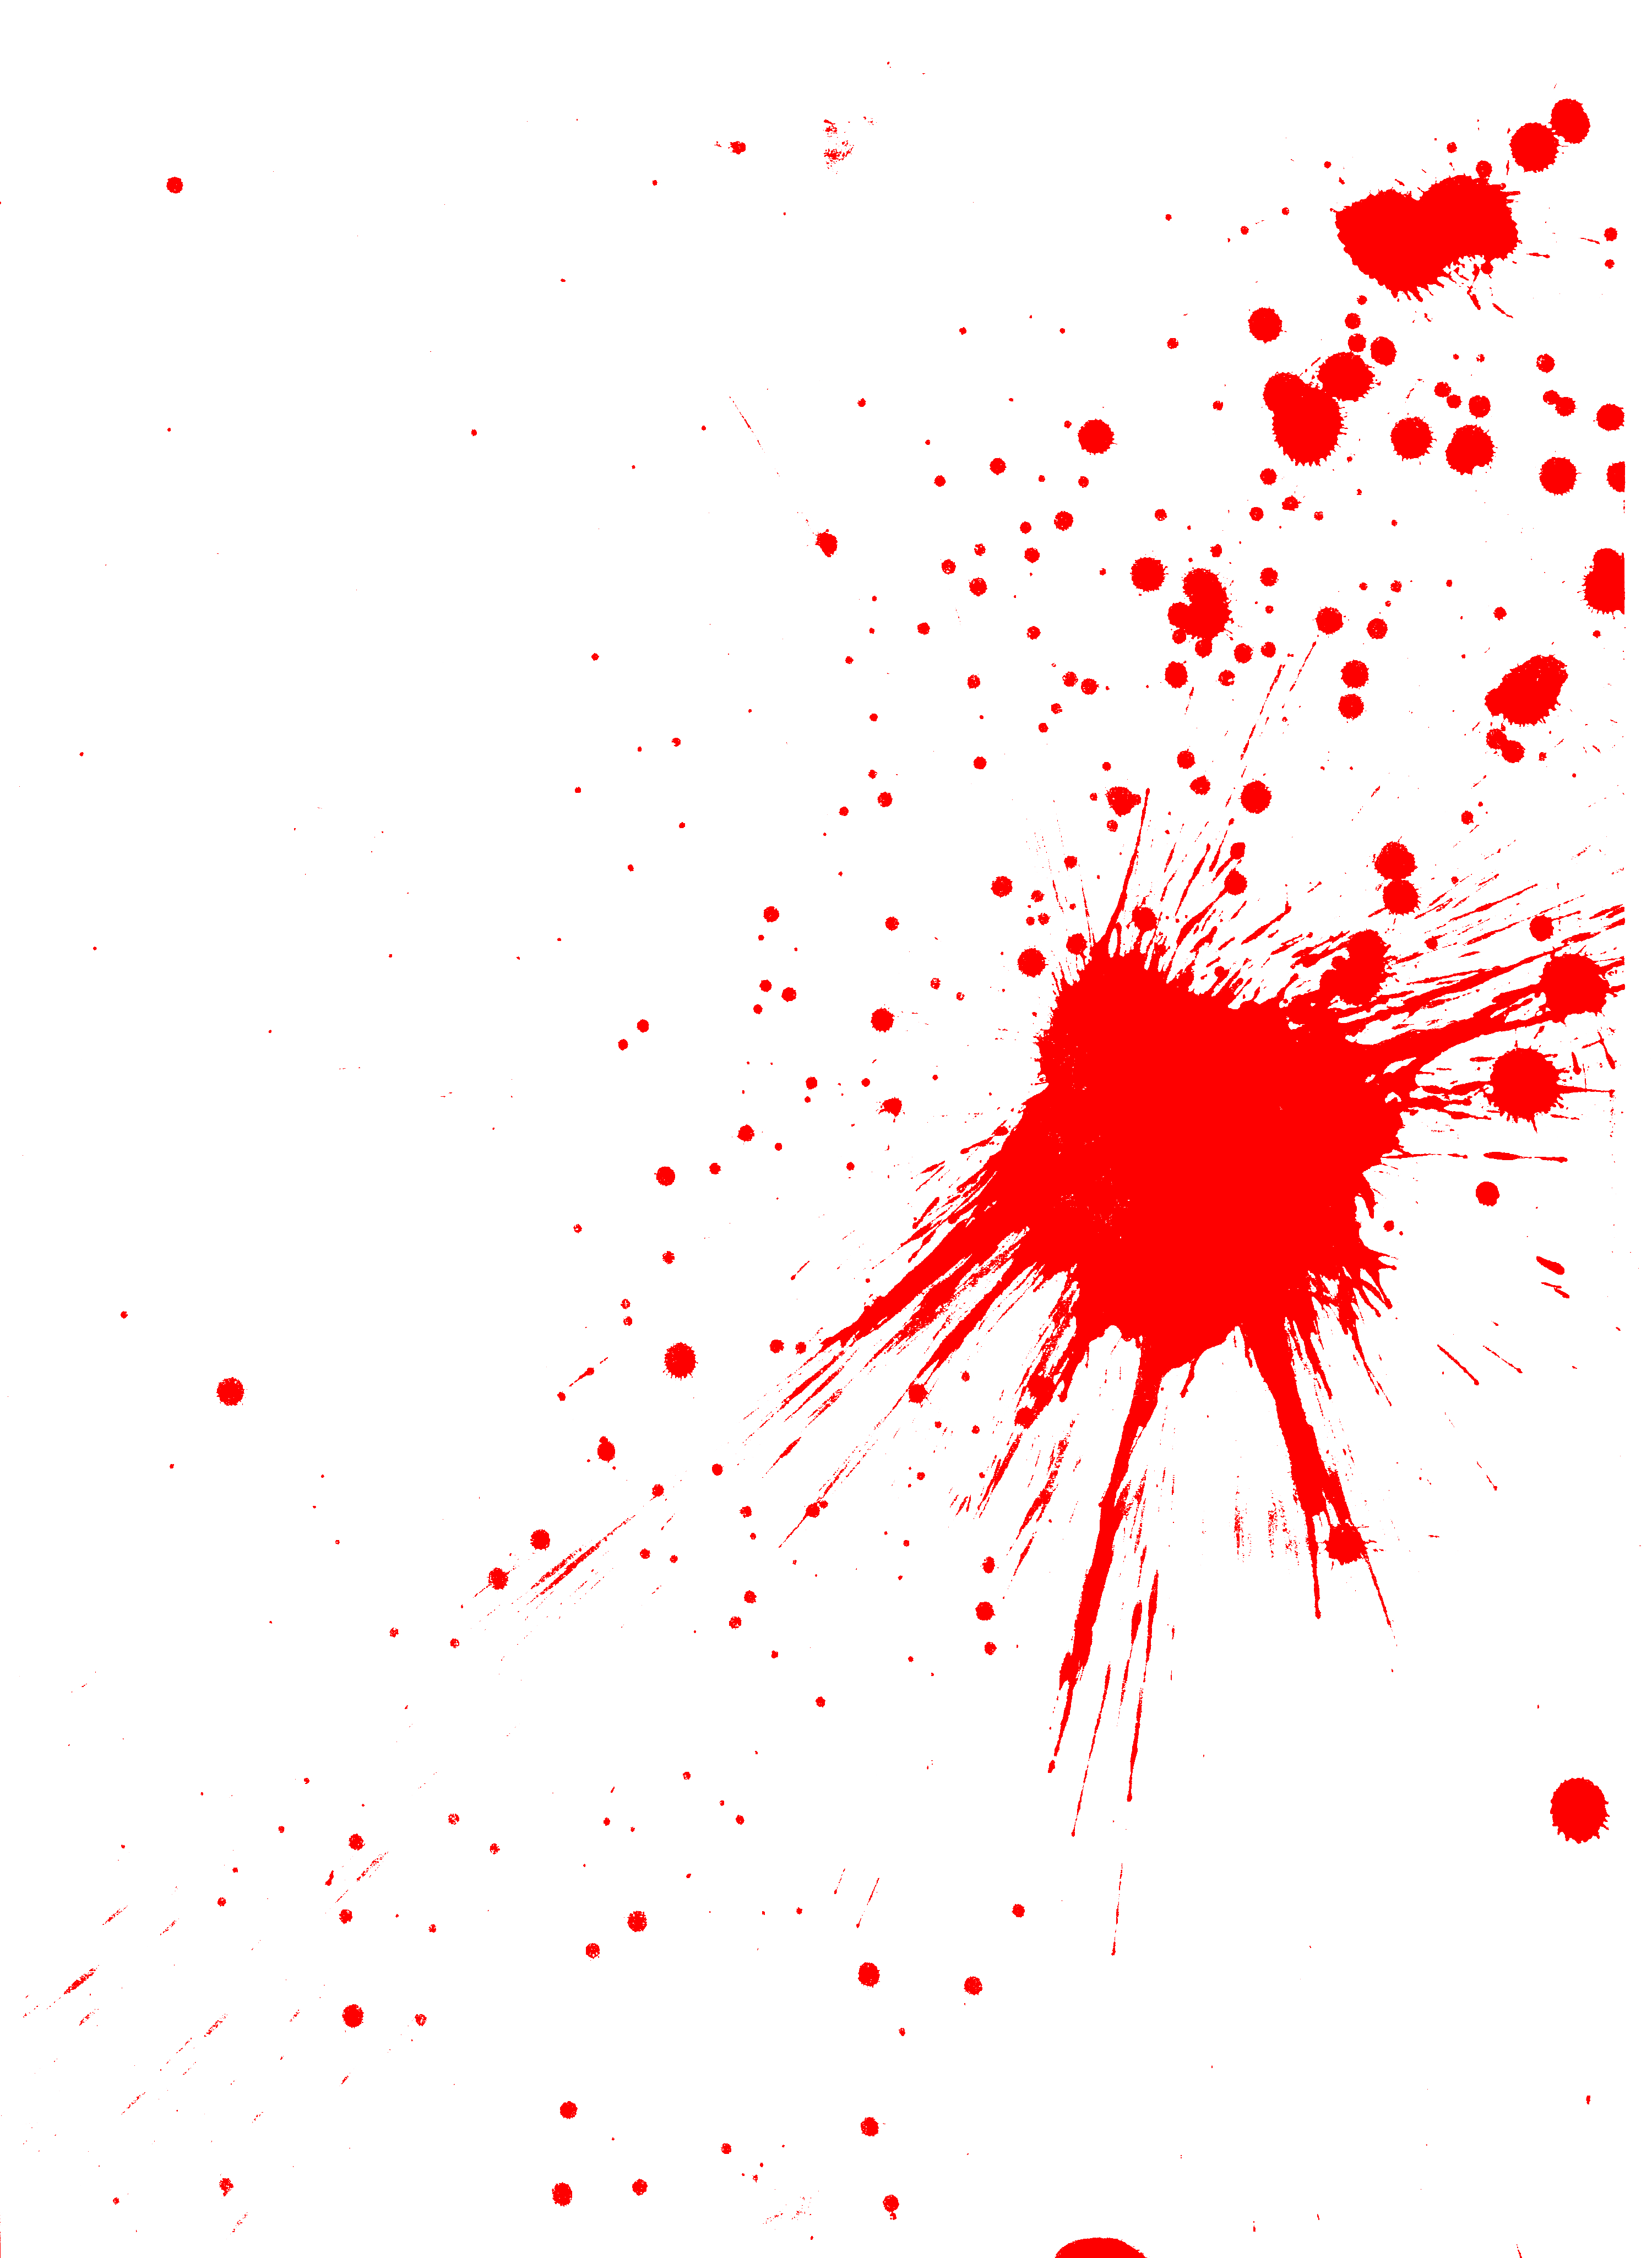 Blood Splatter Textures (JPG)